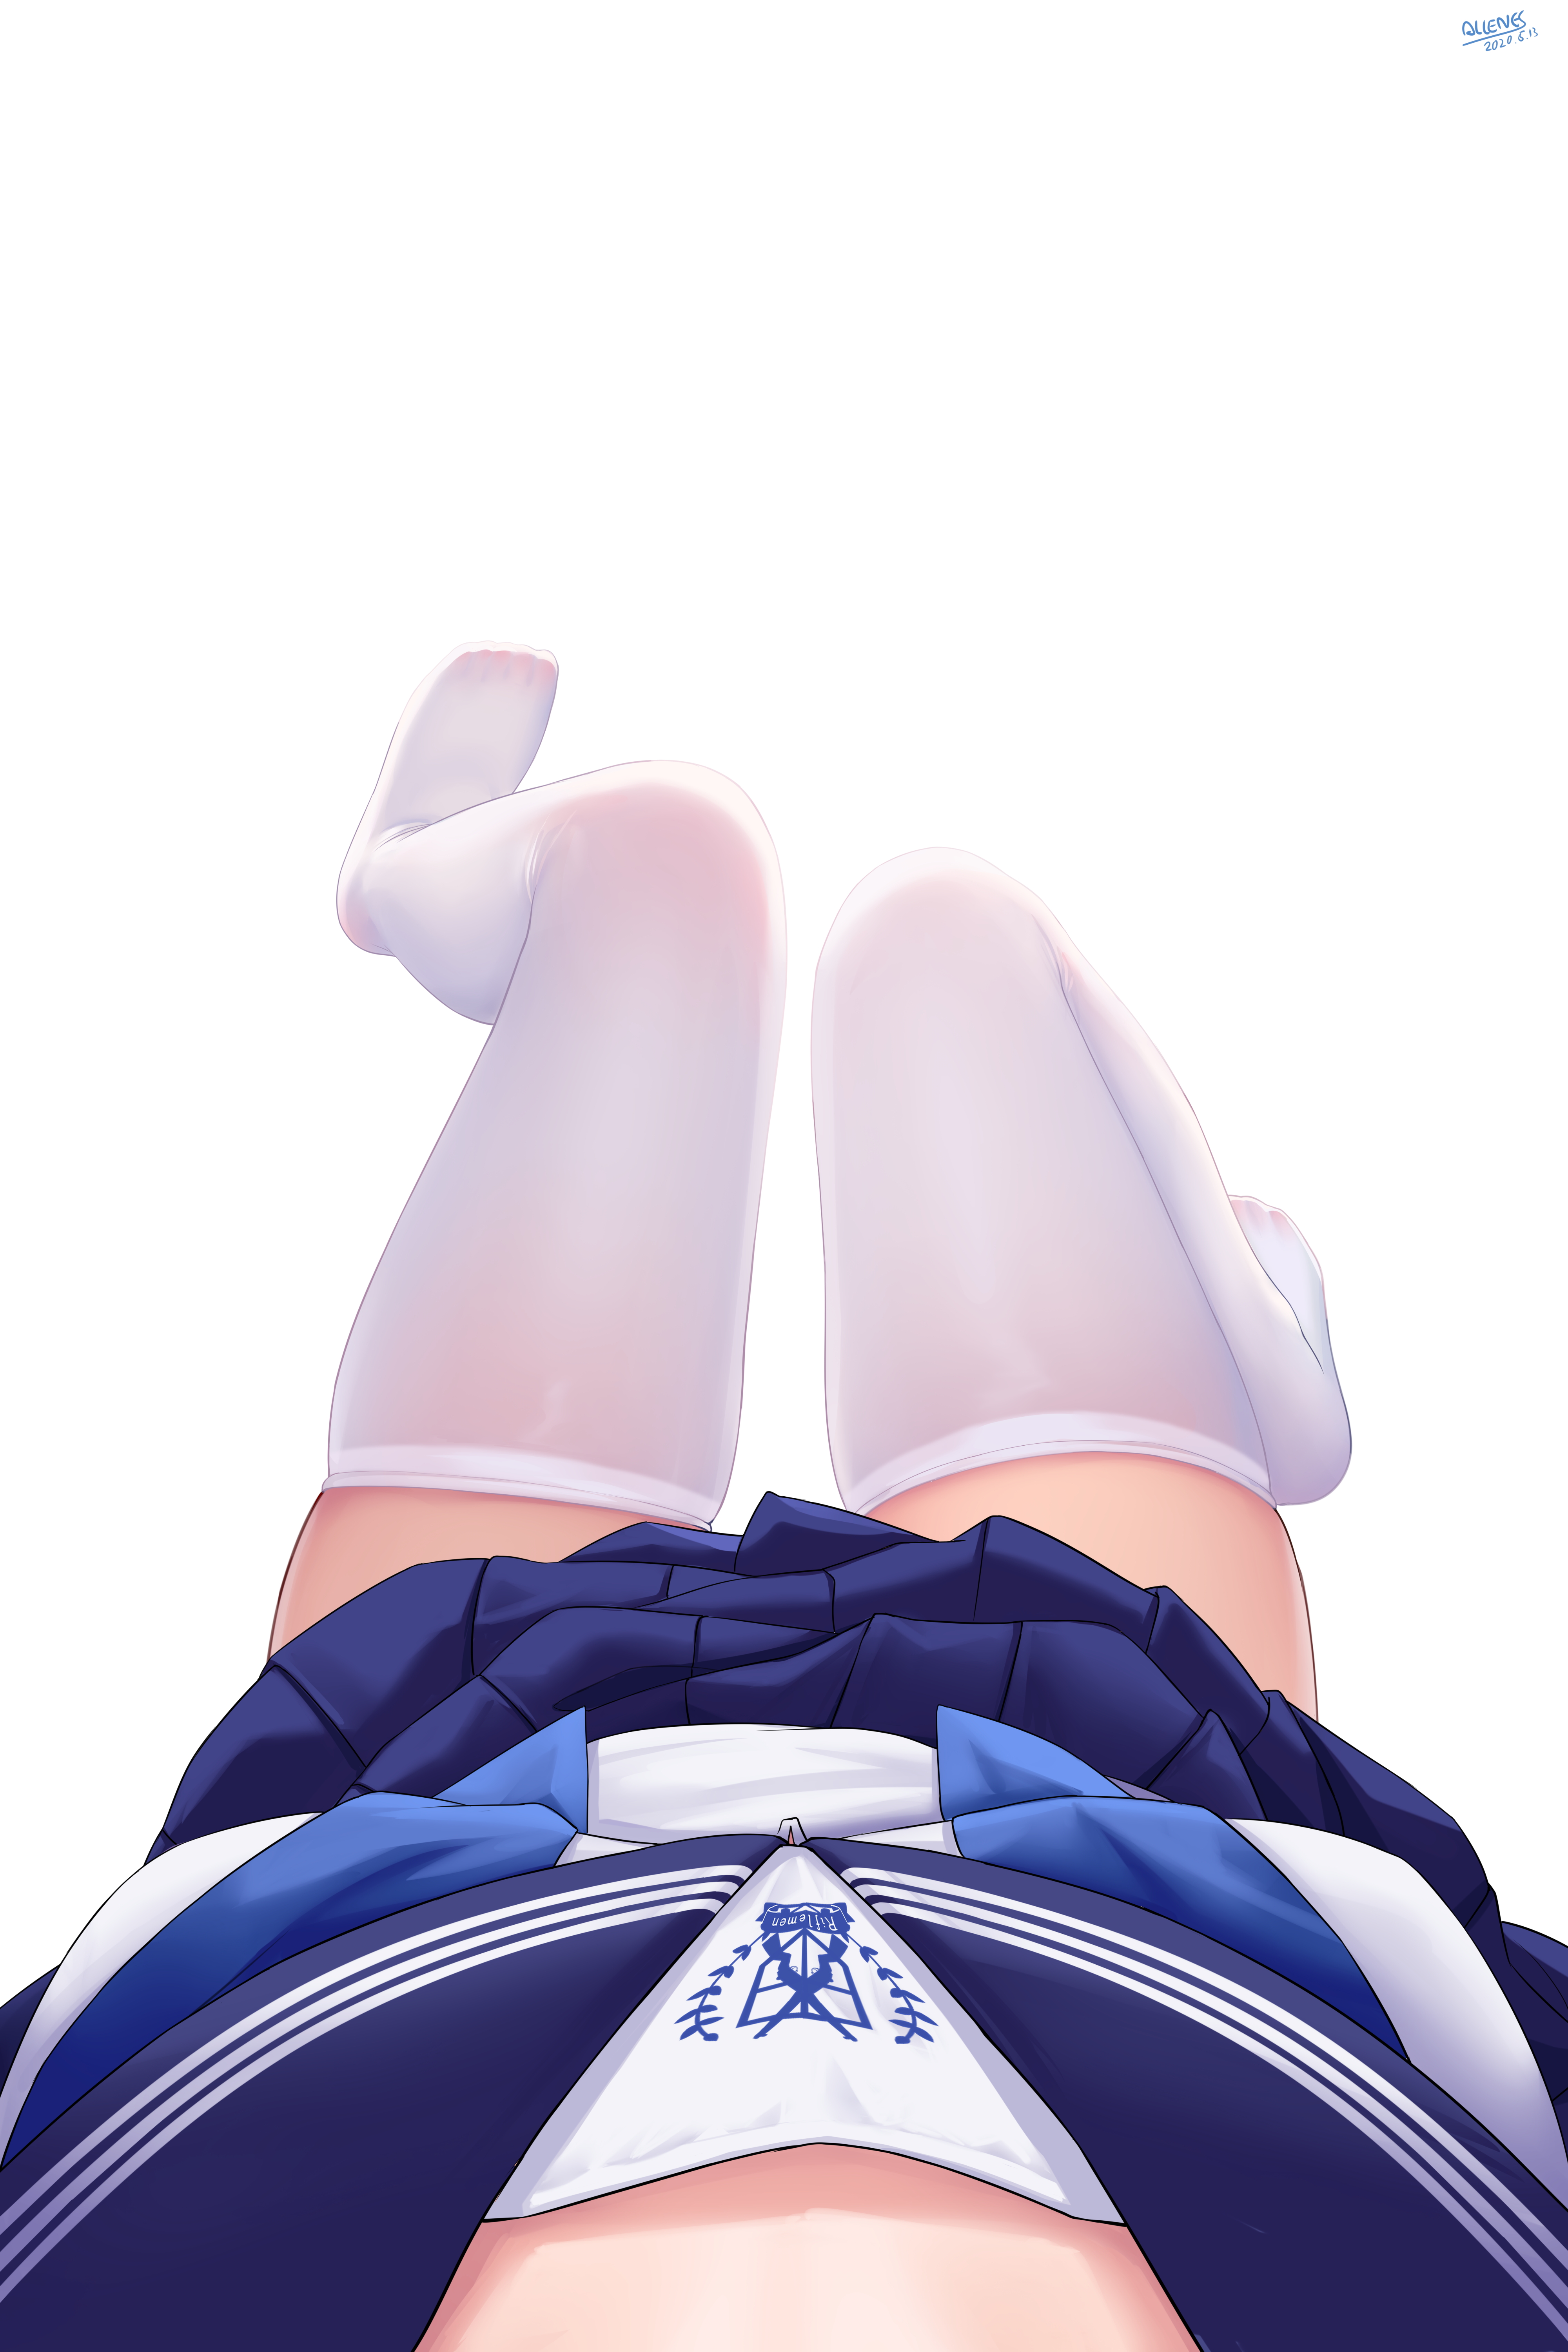 Anime 4000x6000 anime girls digital art artwork 2D anime portrait display vertical zettai ryouiki stockings thigh-highs school uniform POV Allenes